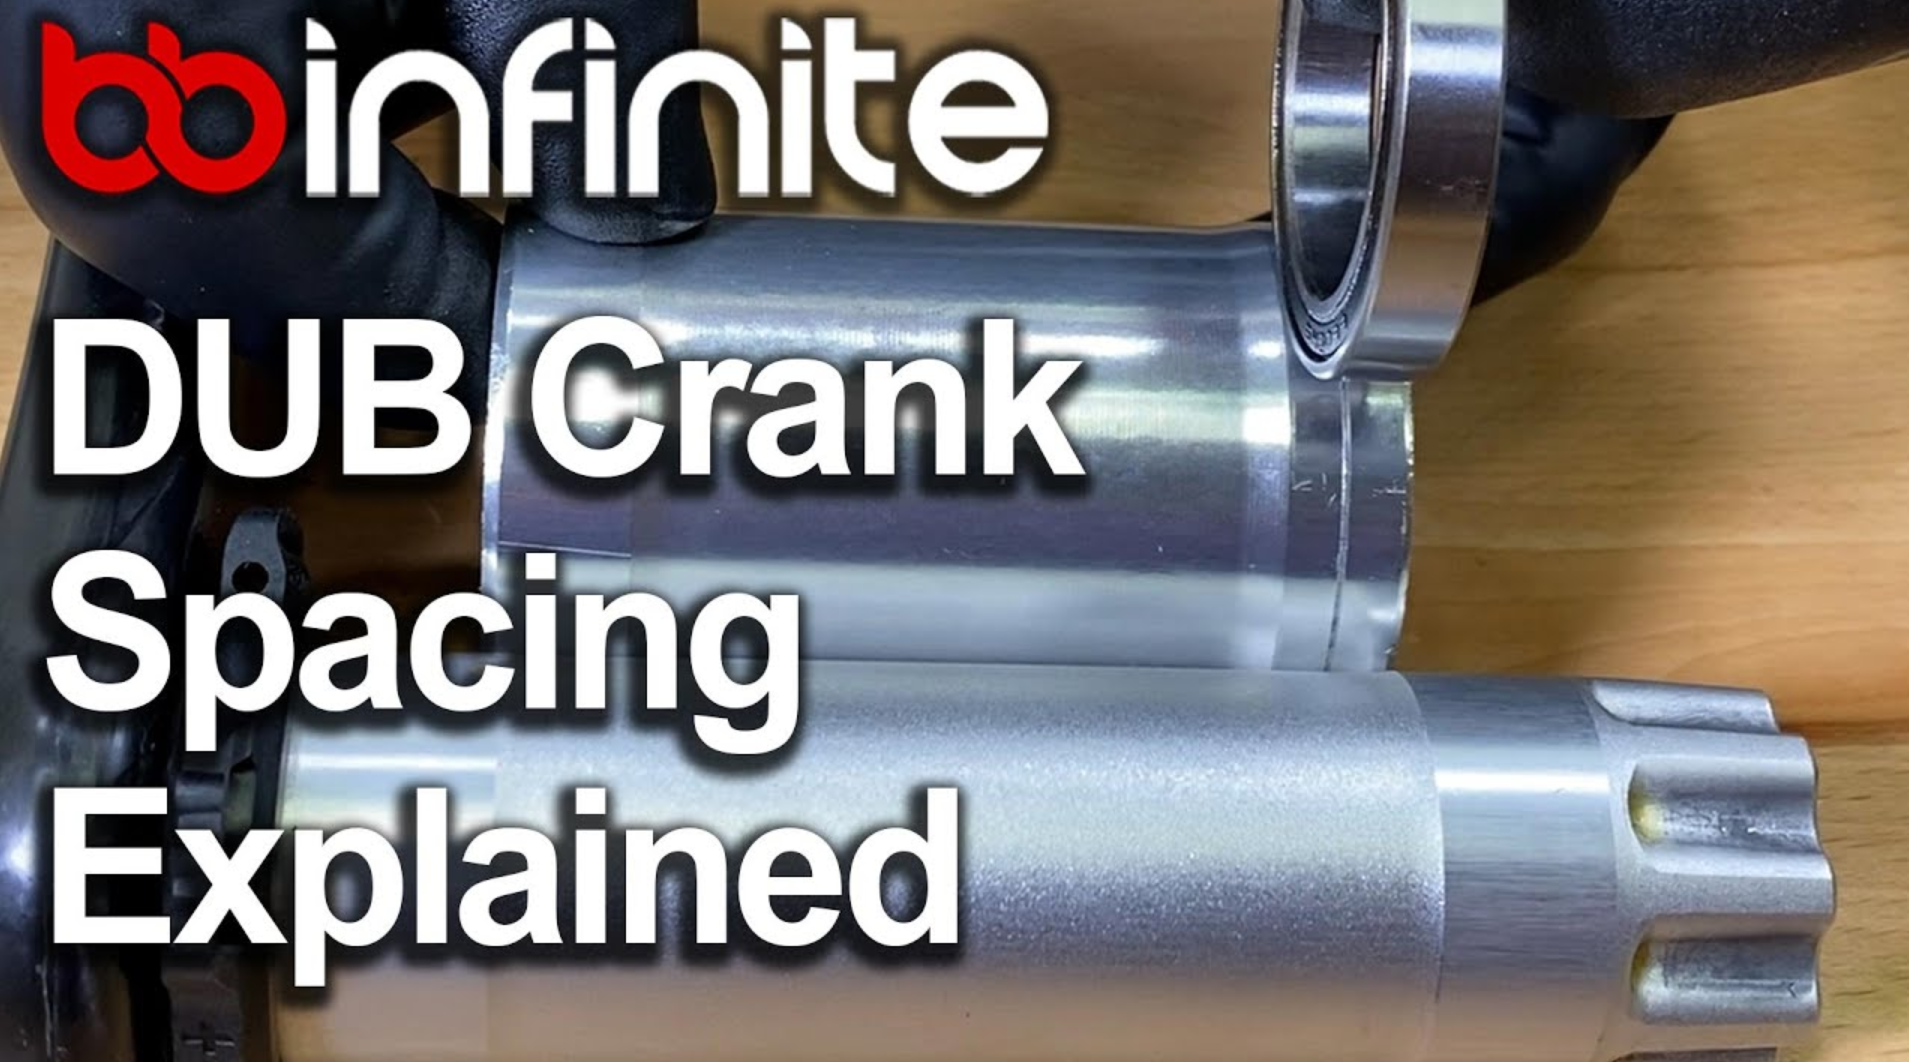 DUB Crank Spacing Explained